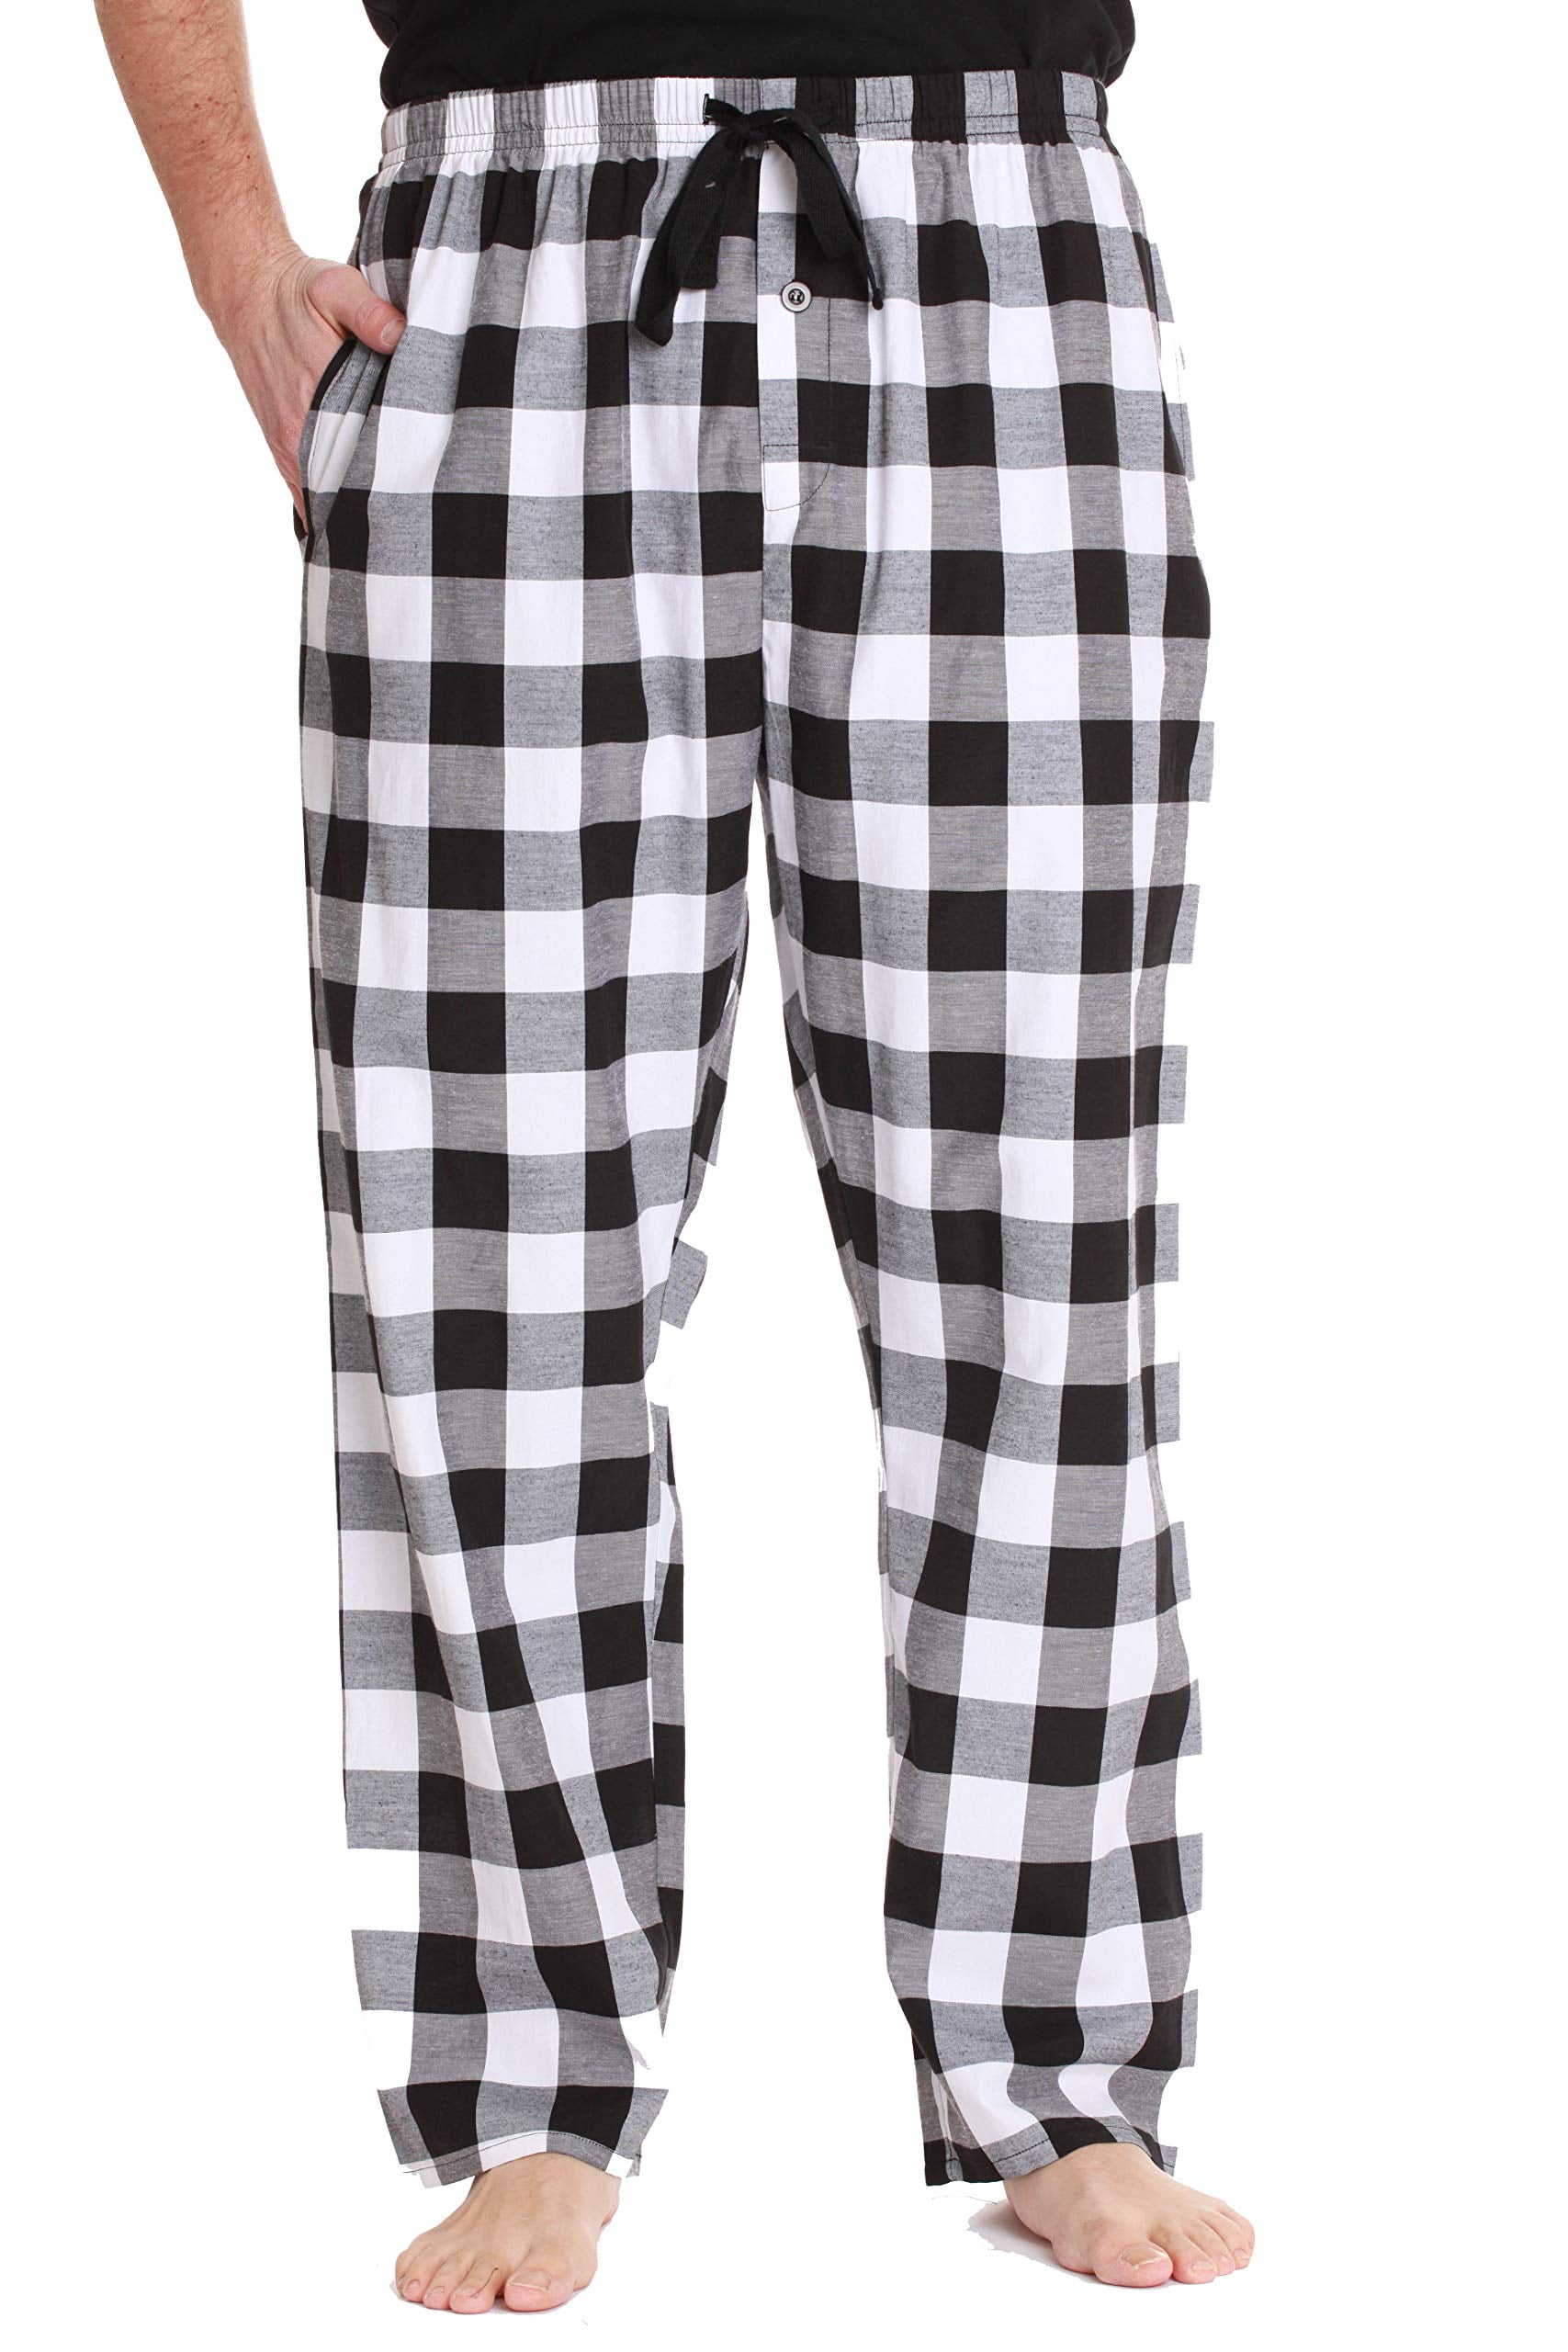 followme Mens Pajama Pants Pajamas for Men (Black White Buffalo Plaid,  Small) 